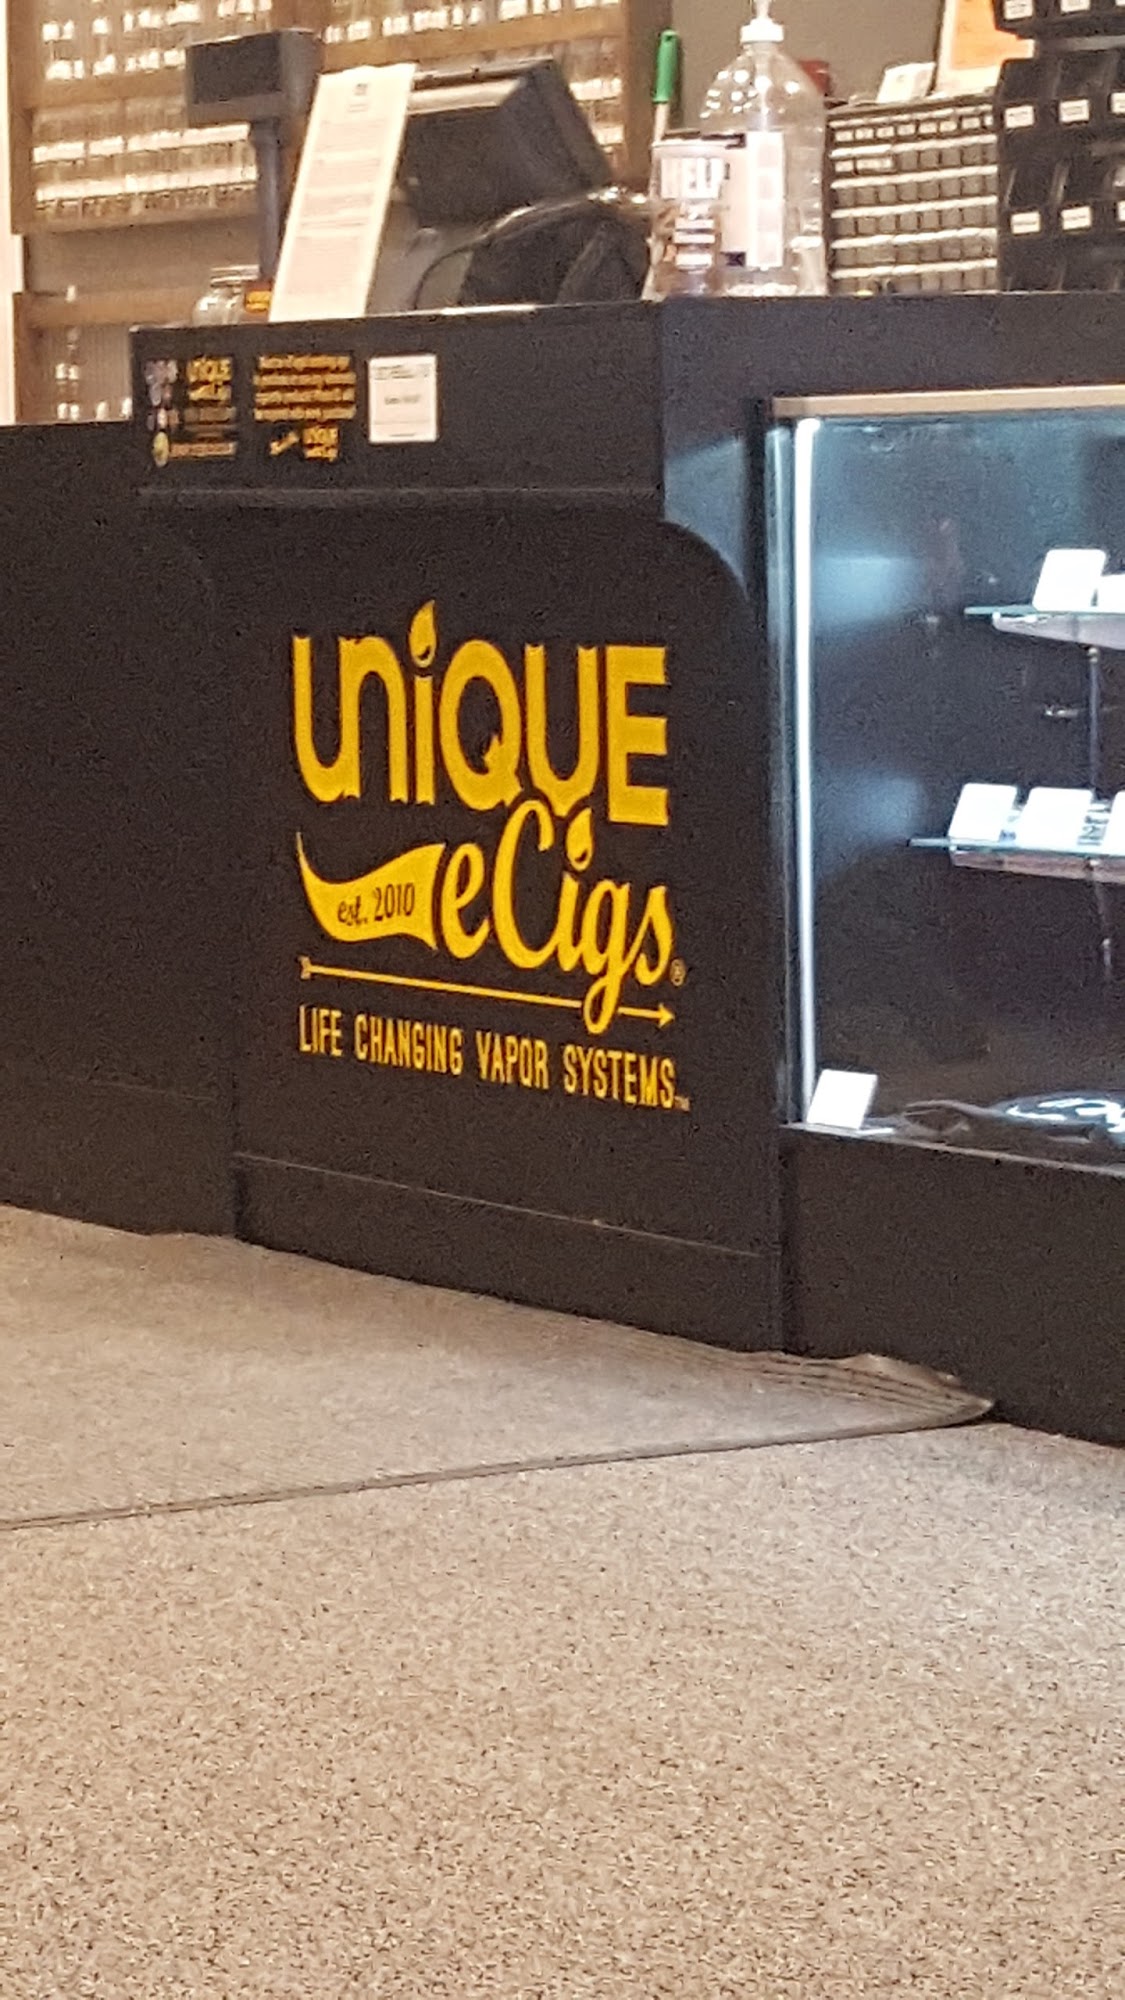 Unique eCigs - Liverpool, NY